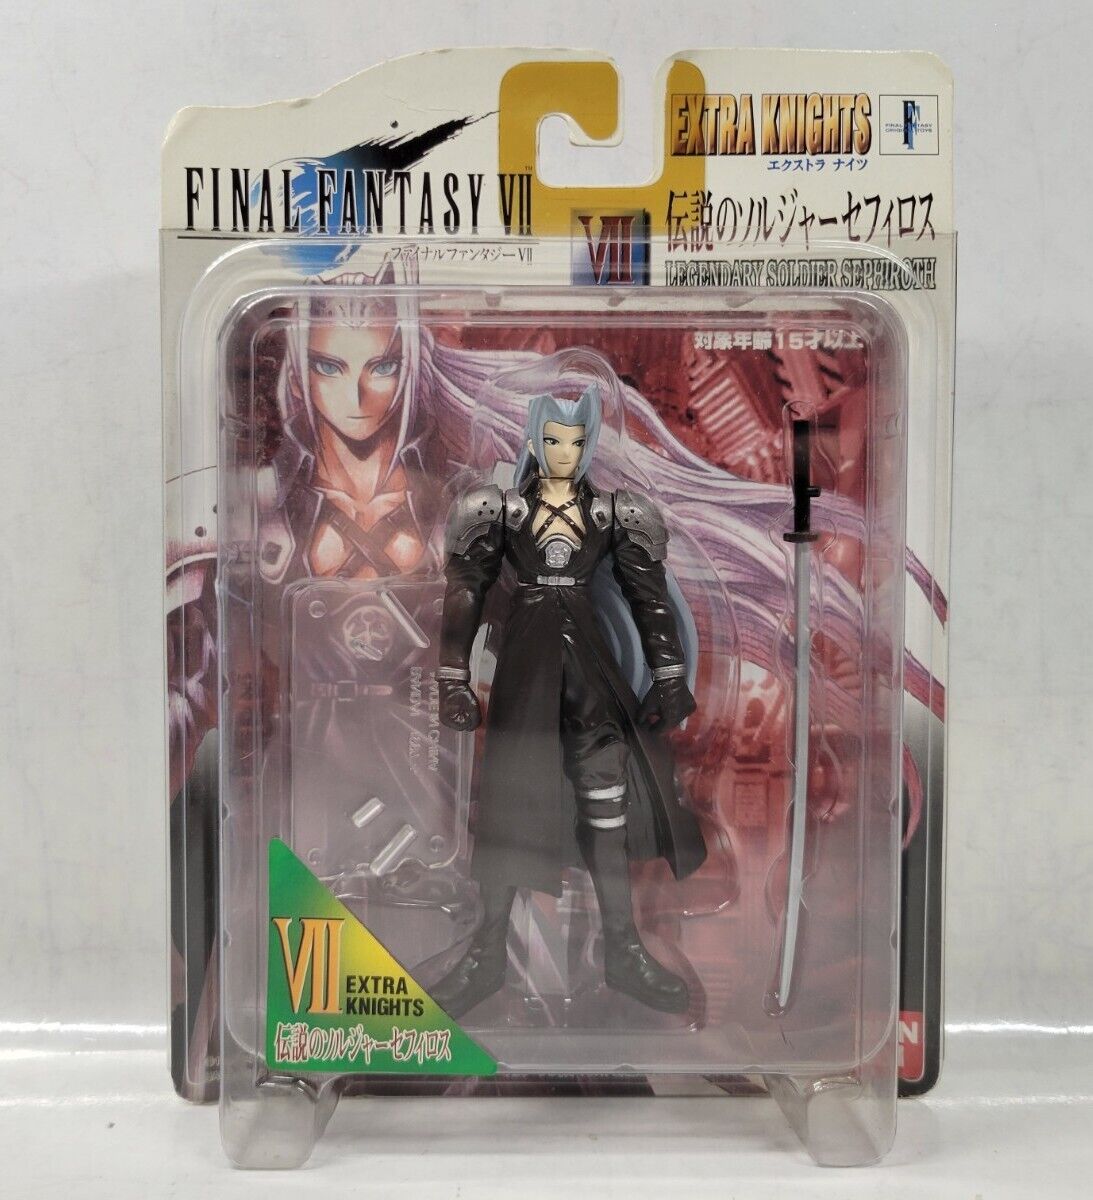 1997 Bandai Final Fantasy 7 VII FF7 Soldier Sephiroth Extra Knights Figure